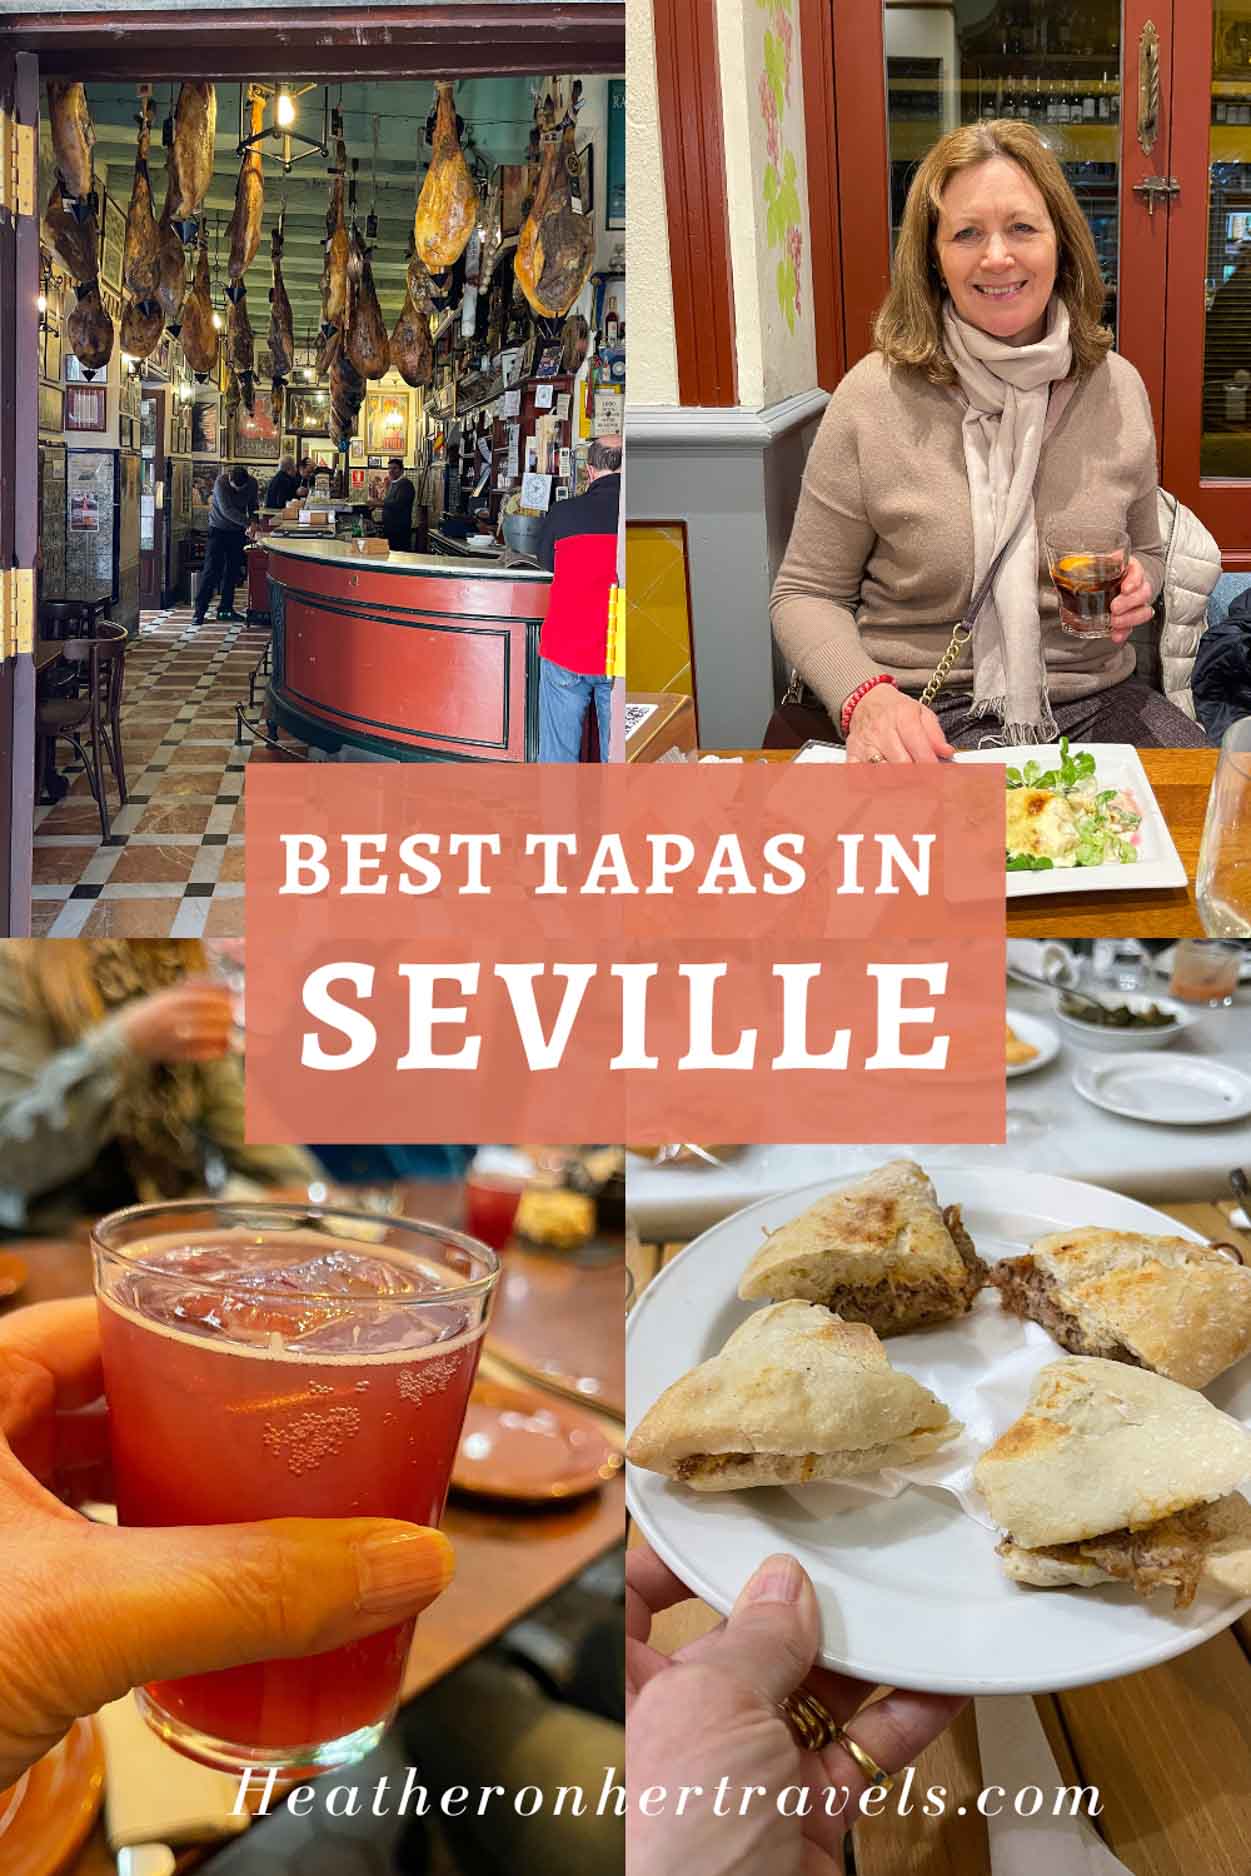 Best Tapas in Seville Heatheronhertravels.com